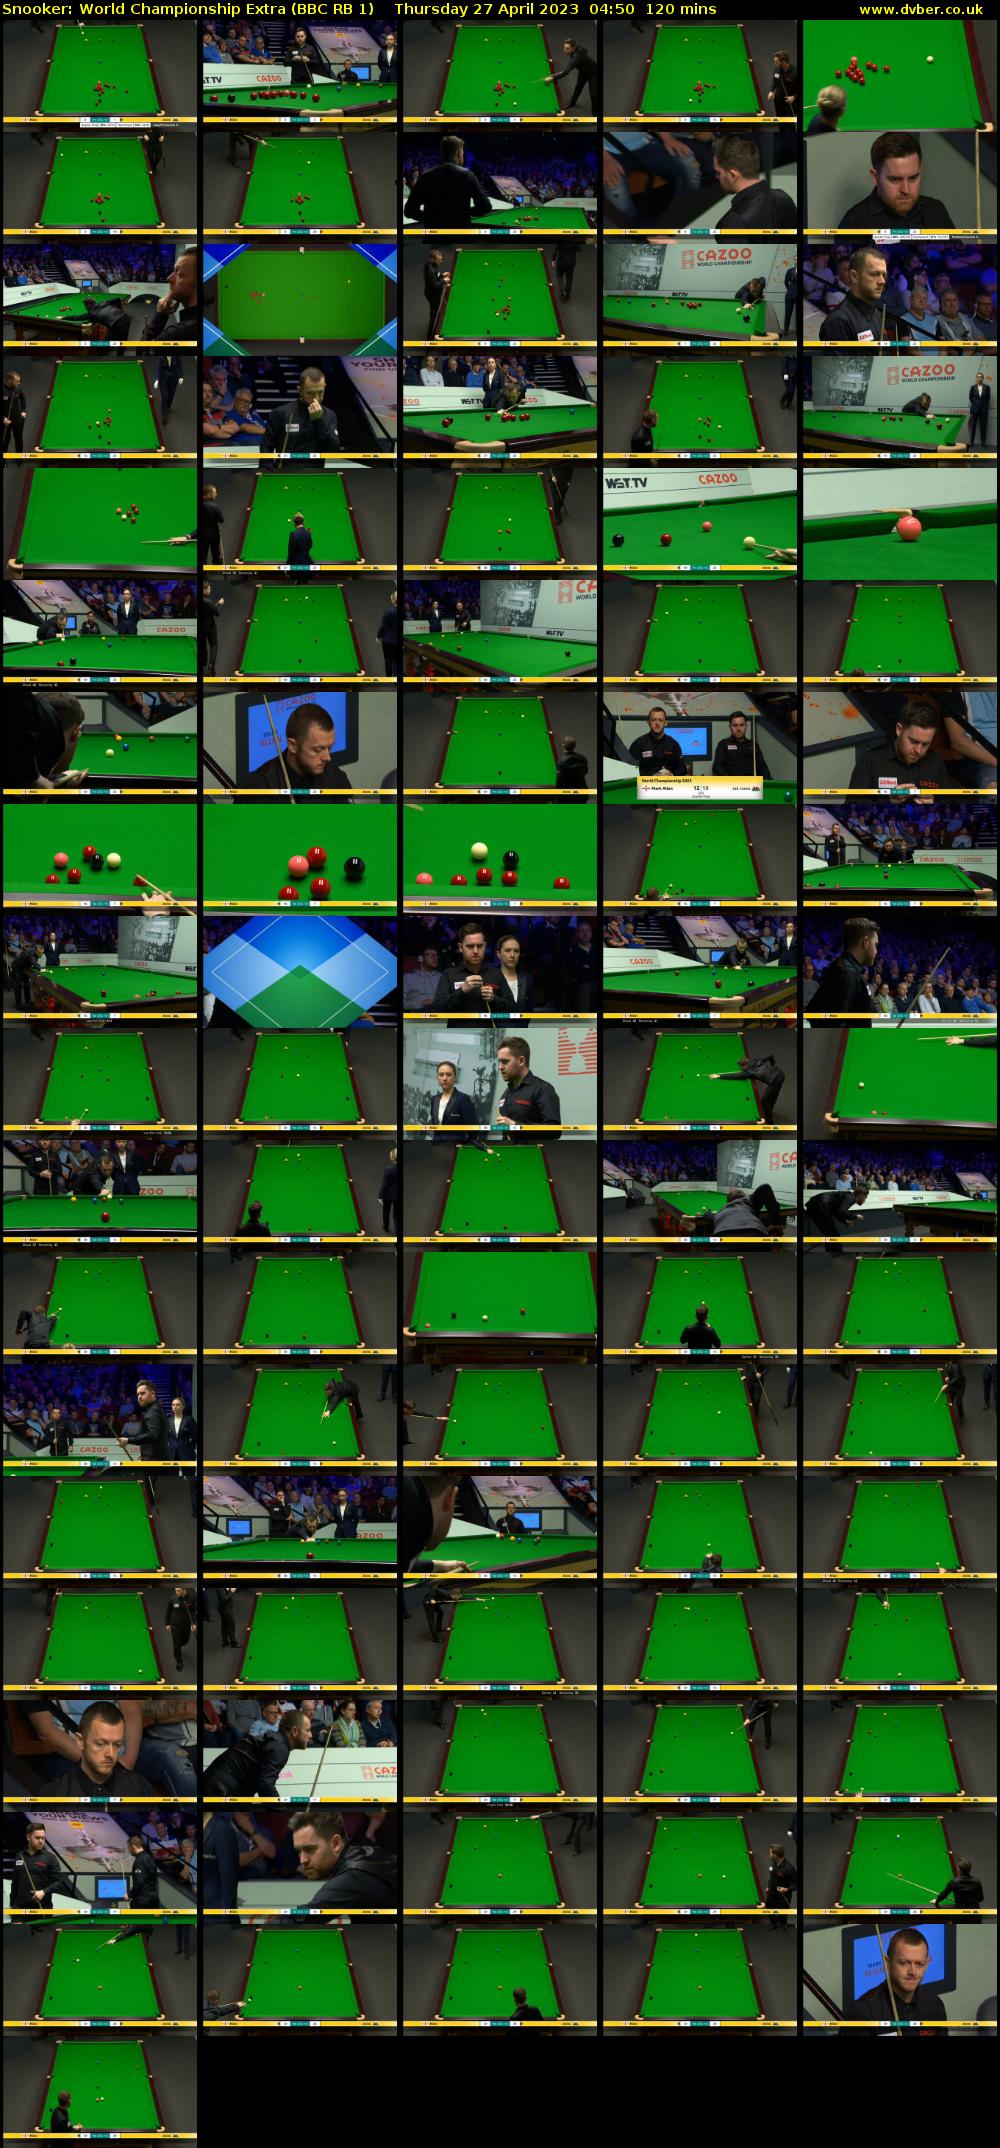 Snooker: World Championship Extra (BBC RB 1) Thursday 27 April 2023 04:50 - 06:50